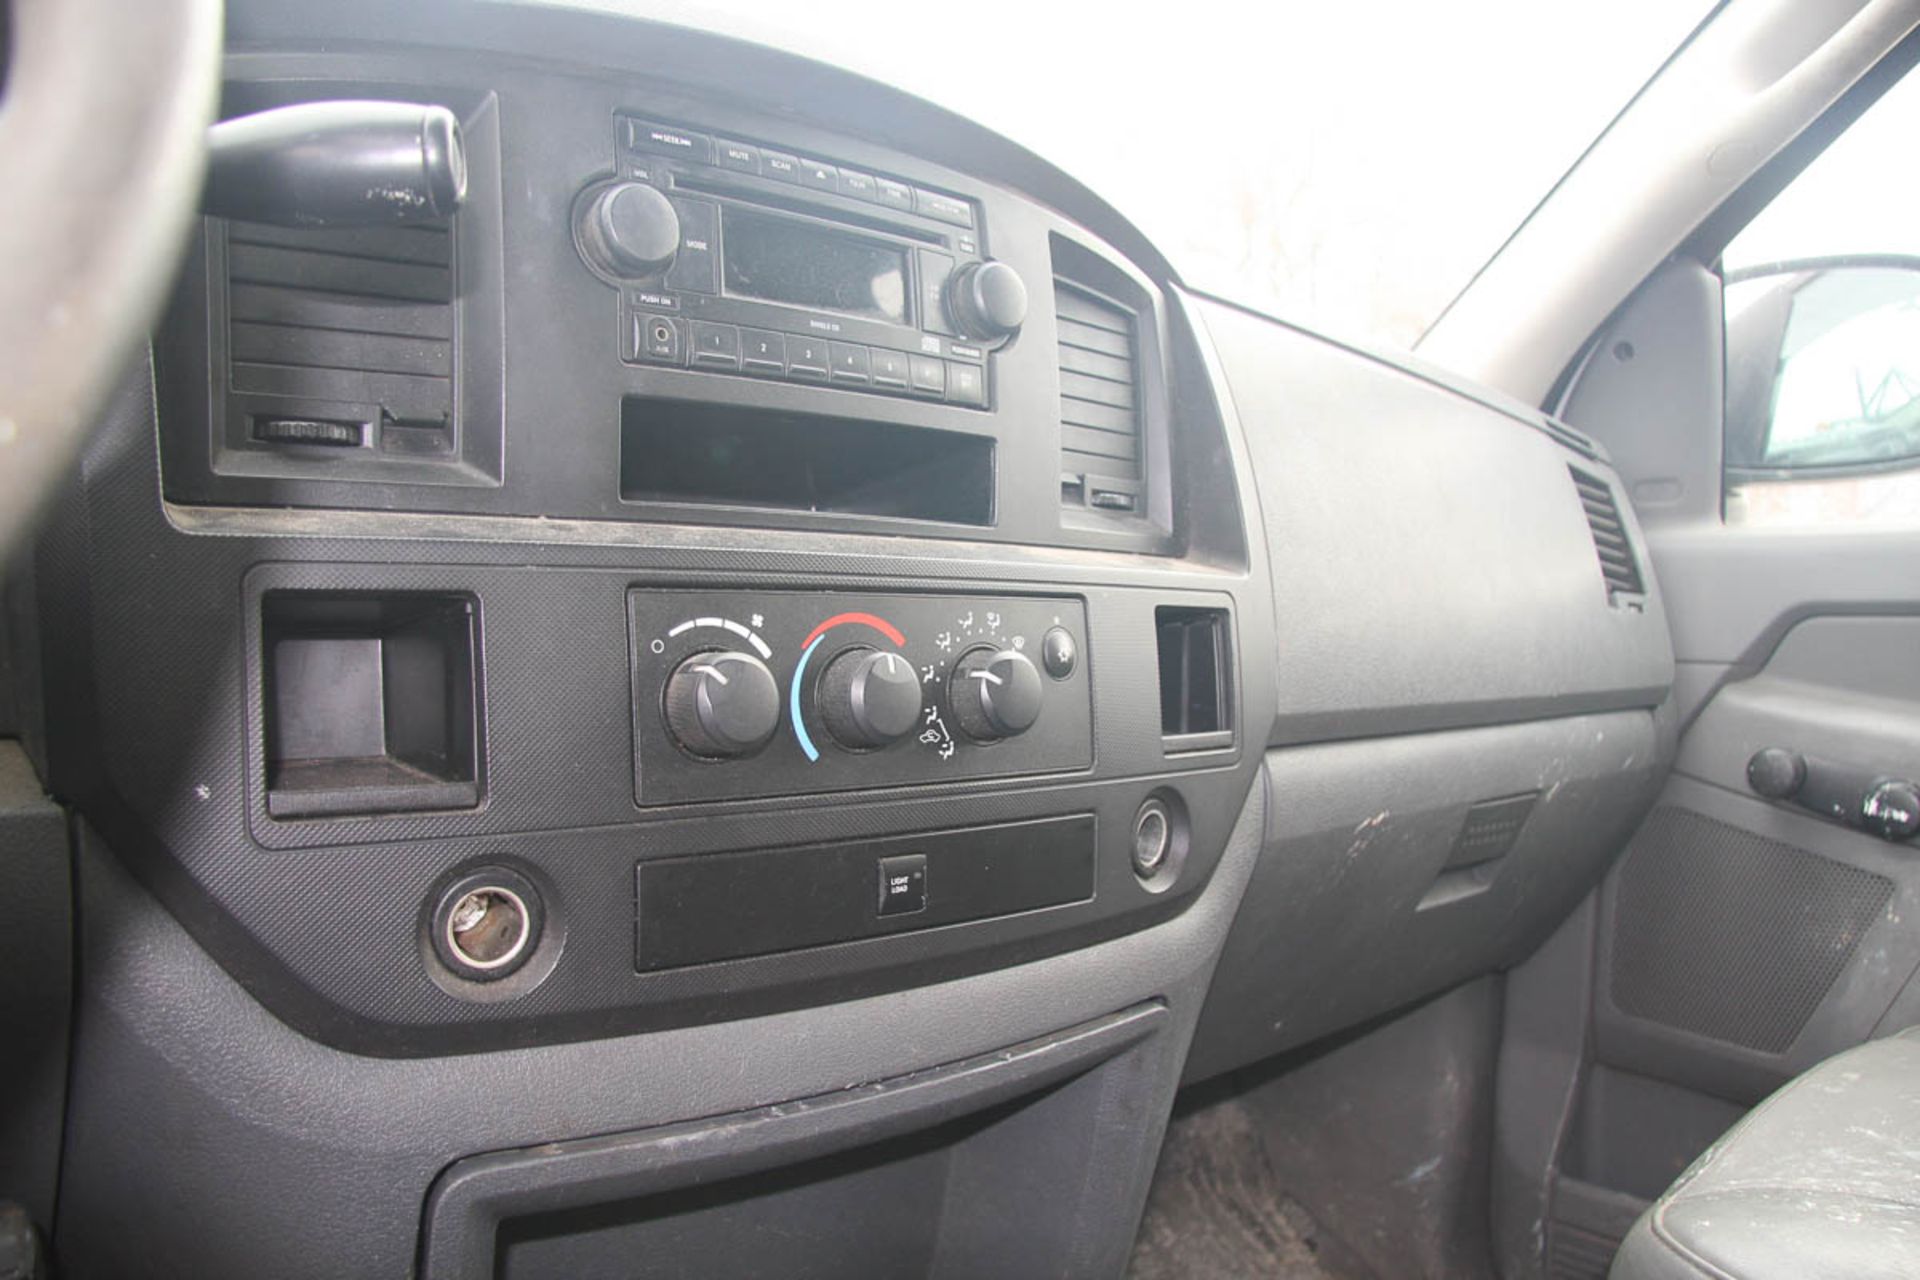 2008 DODGE RAM 2500HD 4-DOOR PICKUP TRUCK, 8' BED, 4-WHEEL DRIVE, AUTOMATIC TRANSMISSION, 5.7L V8 - Image 10 of 15